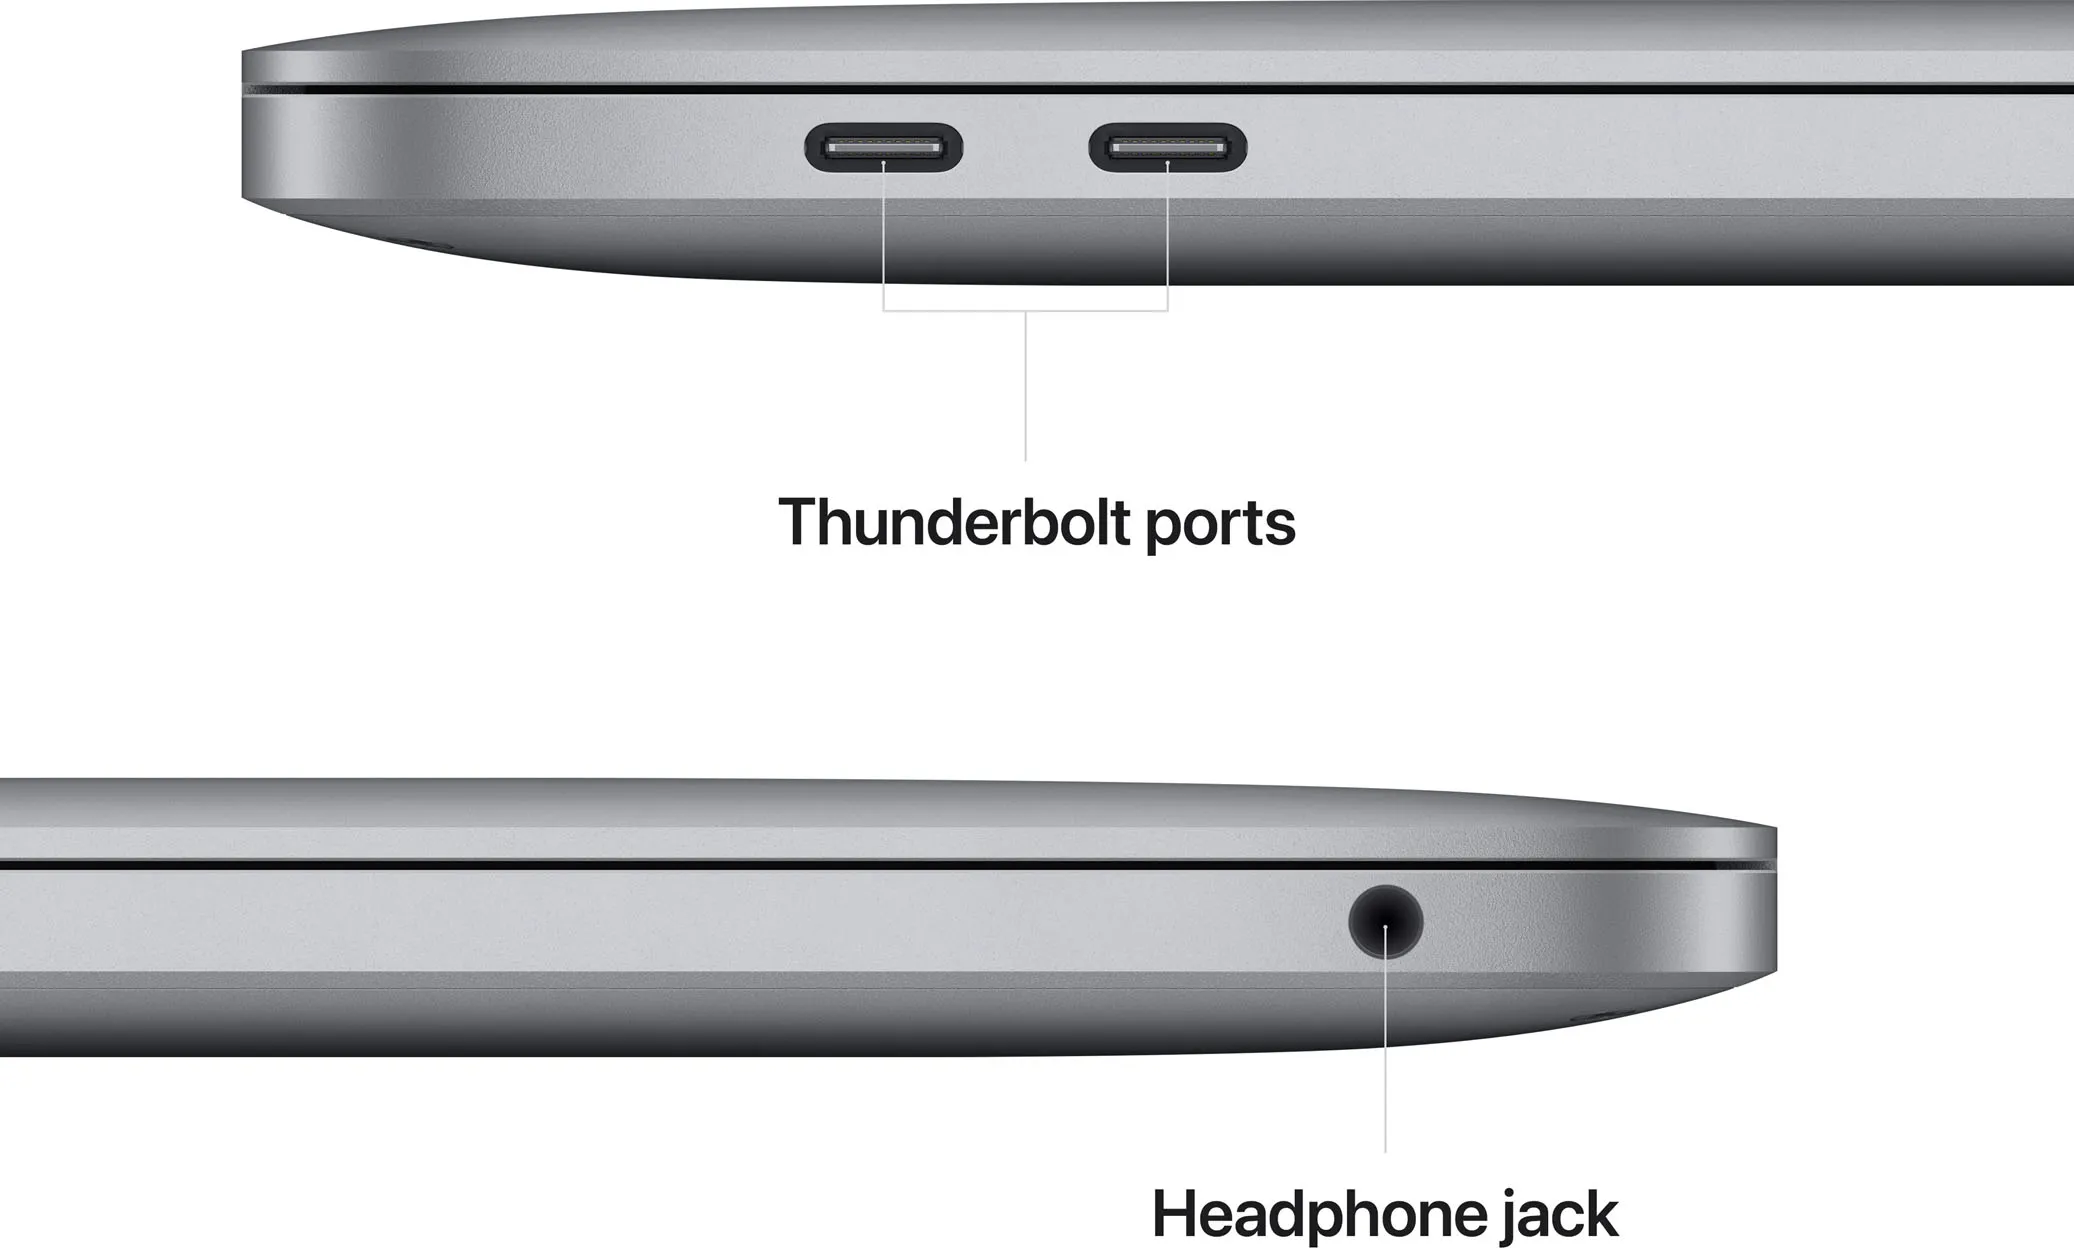 APPLE MacBook PRO M2 – (8 GB/512 GB SSD/macOS Monterey/13.3 Inch/1.38 Kg) – Space Grey – 2022